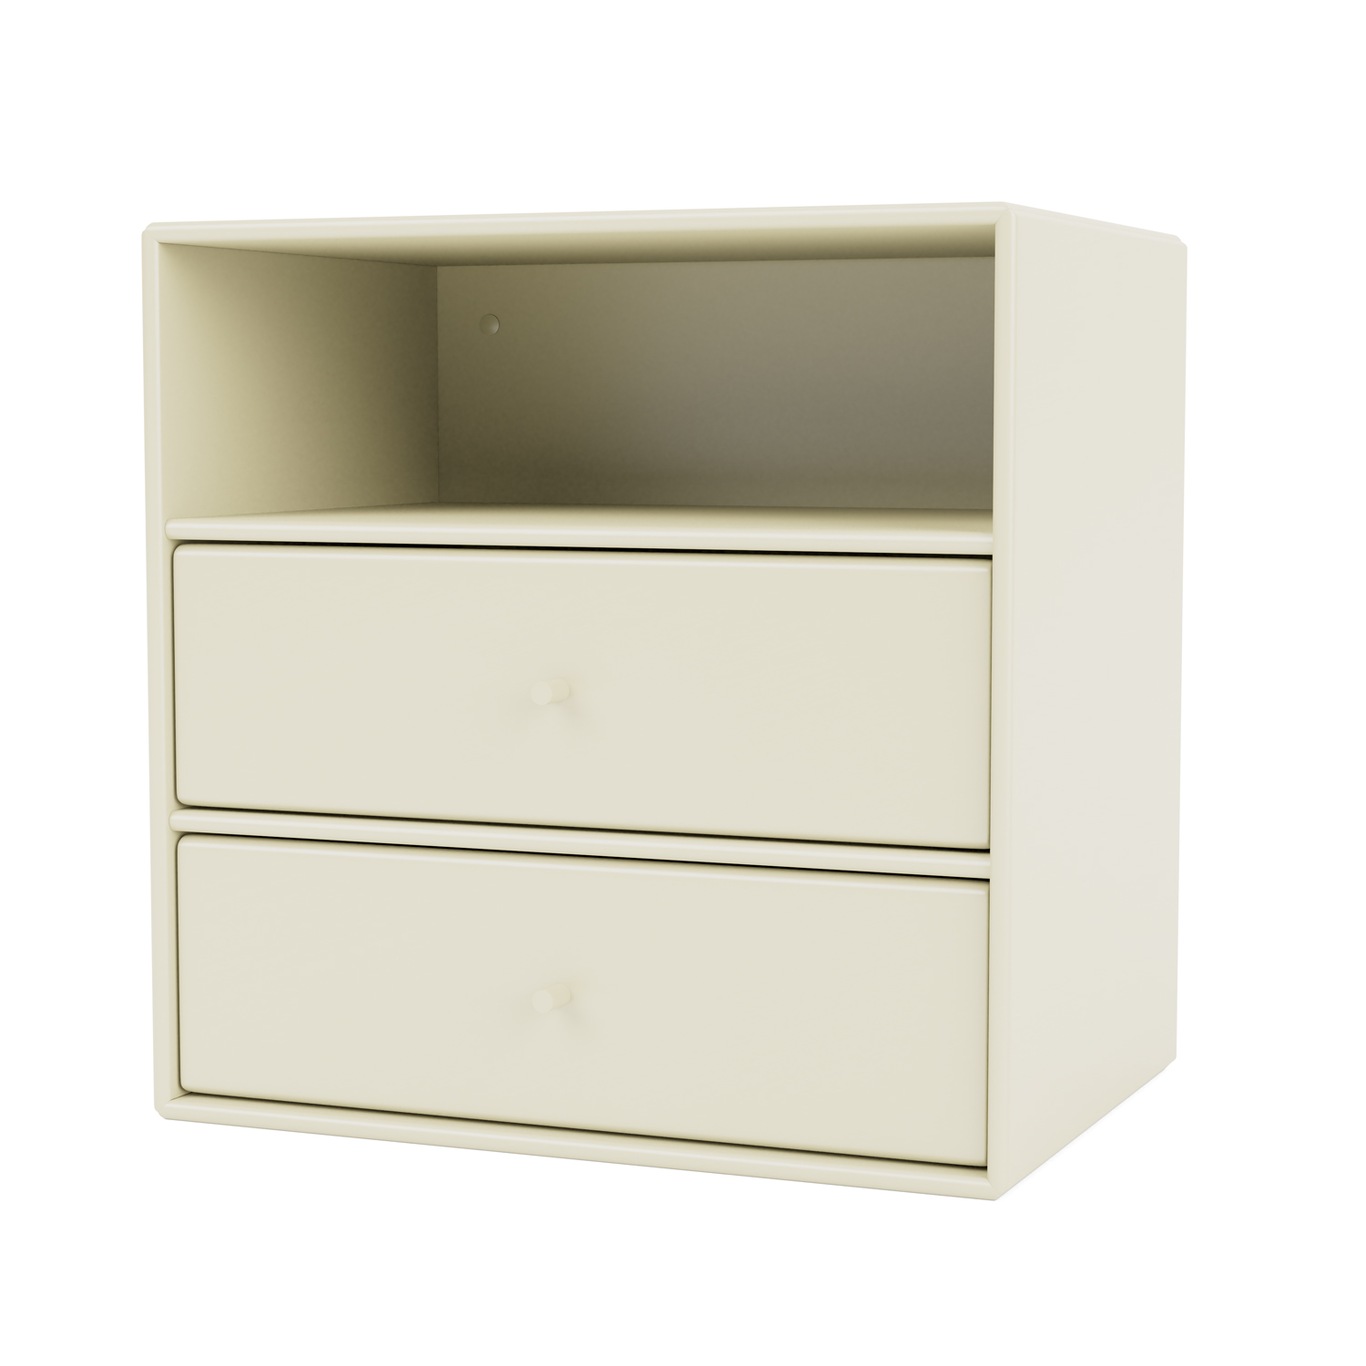 Mini 1006 Shelf With Two Drawers, Vanilla